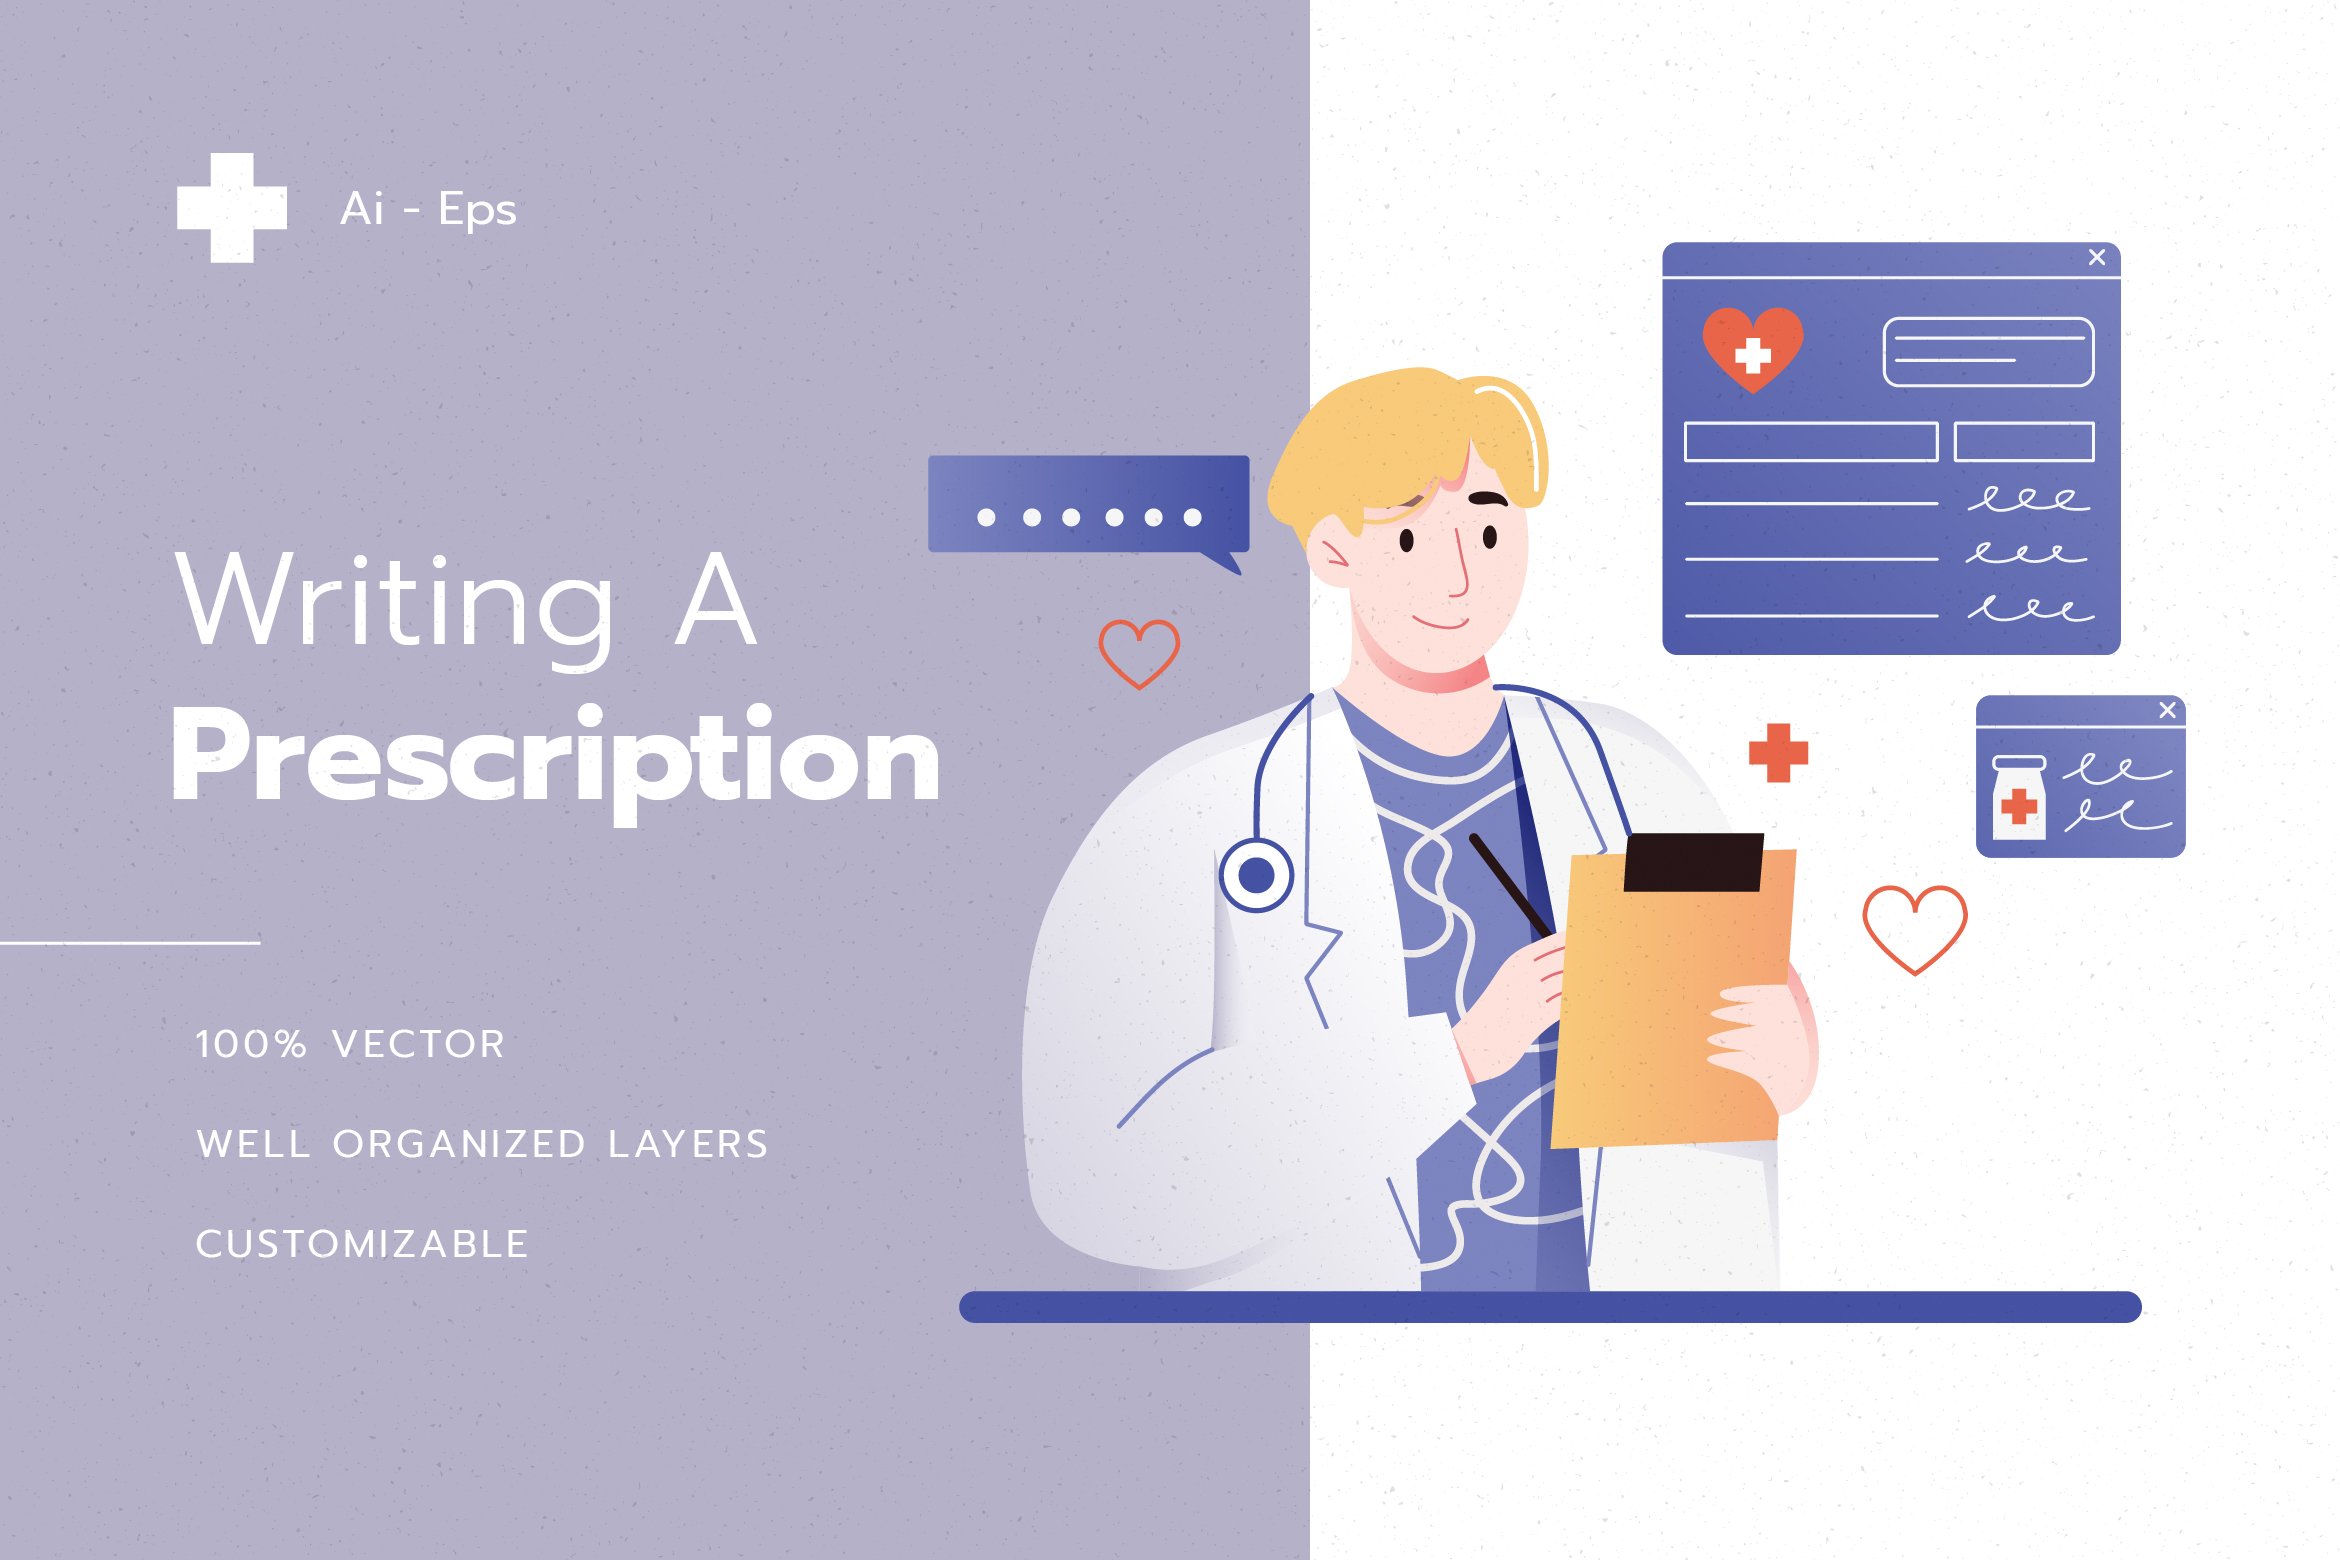 Writing a Prescription Illustration cover image.